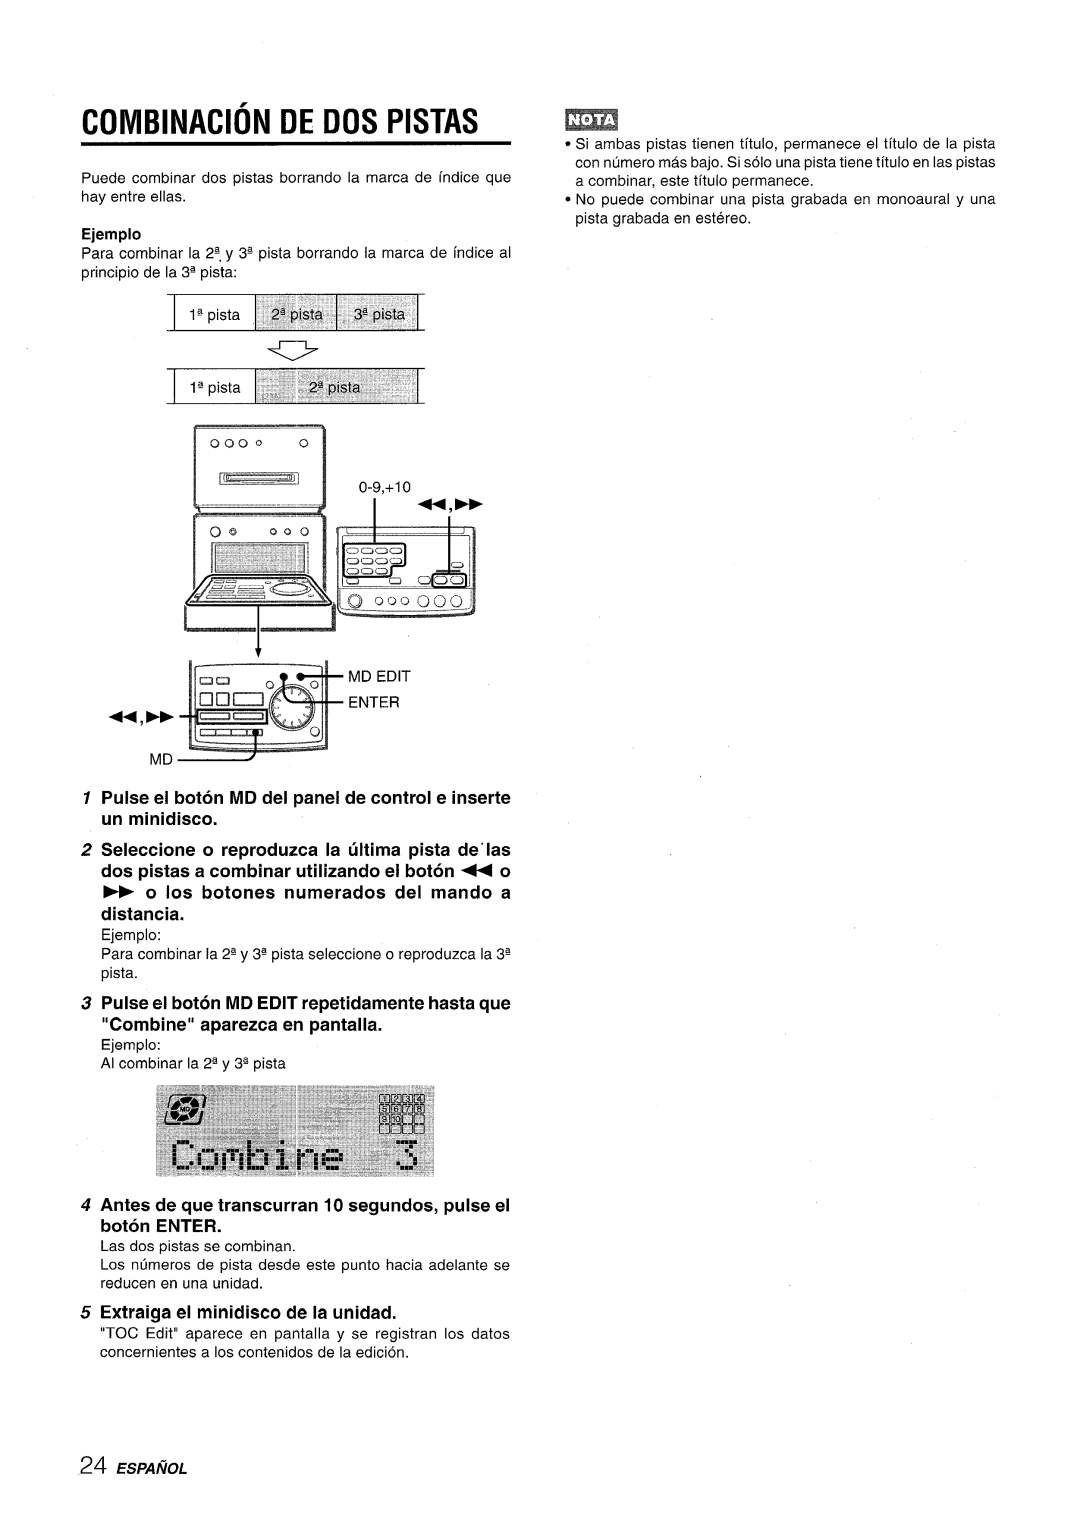 Aiwa XR-MD95 manual Combination De Dos Pistas, Pulse el boton MD del panel de control e inserte un minidisco 